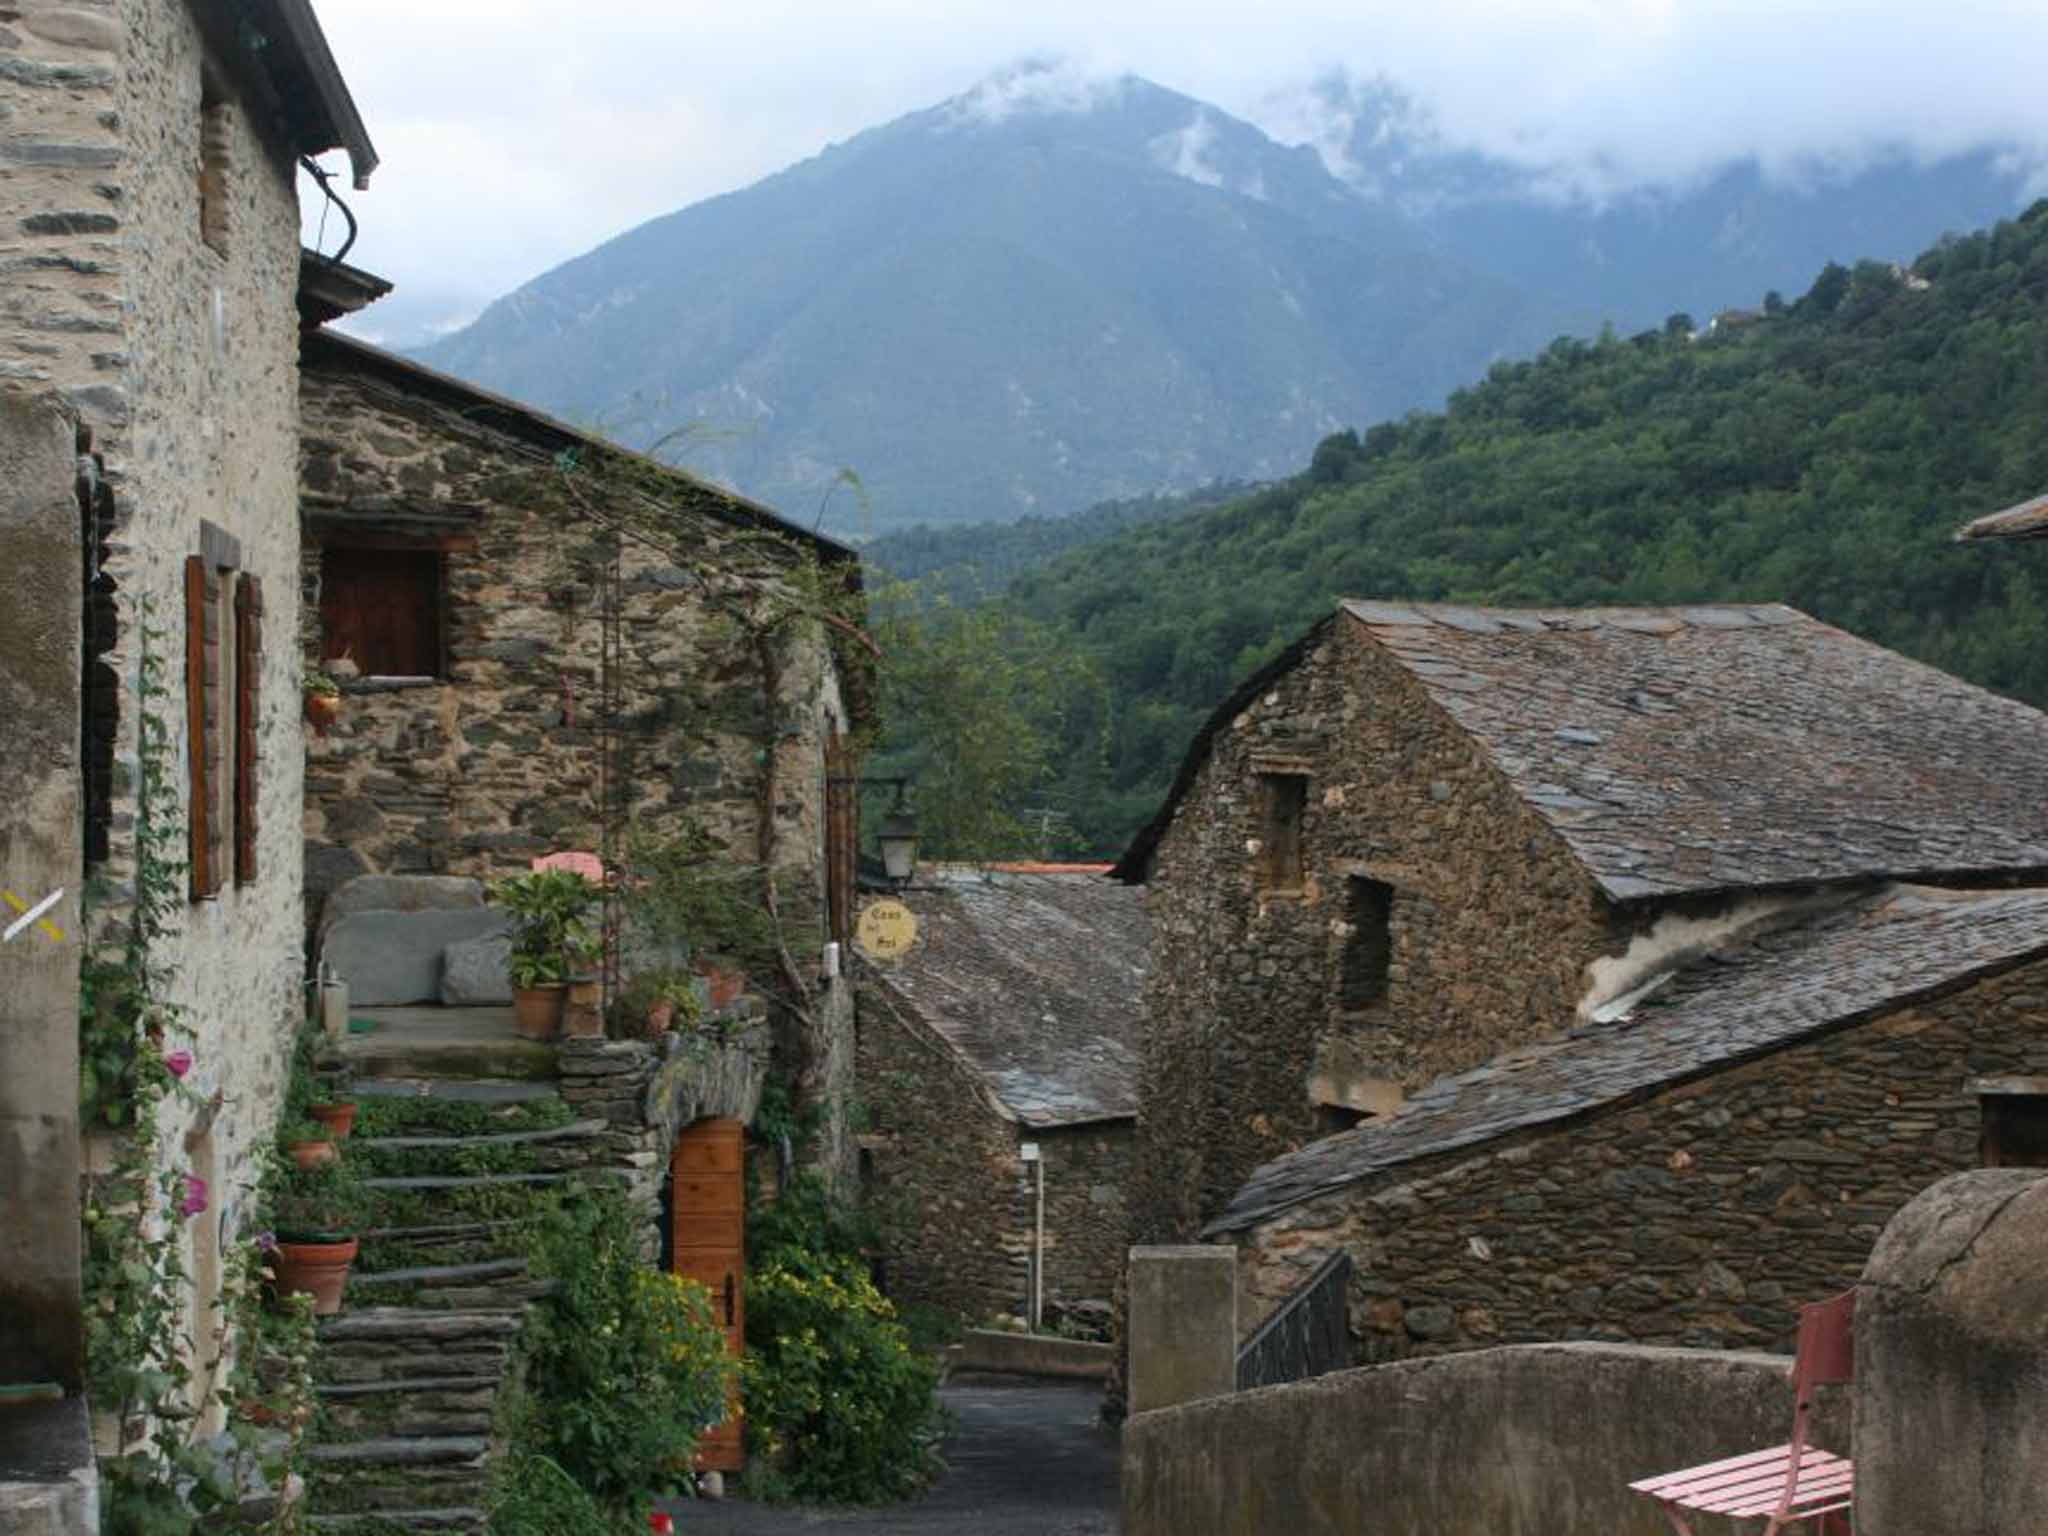 Mountain village near Villefranche